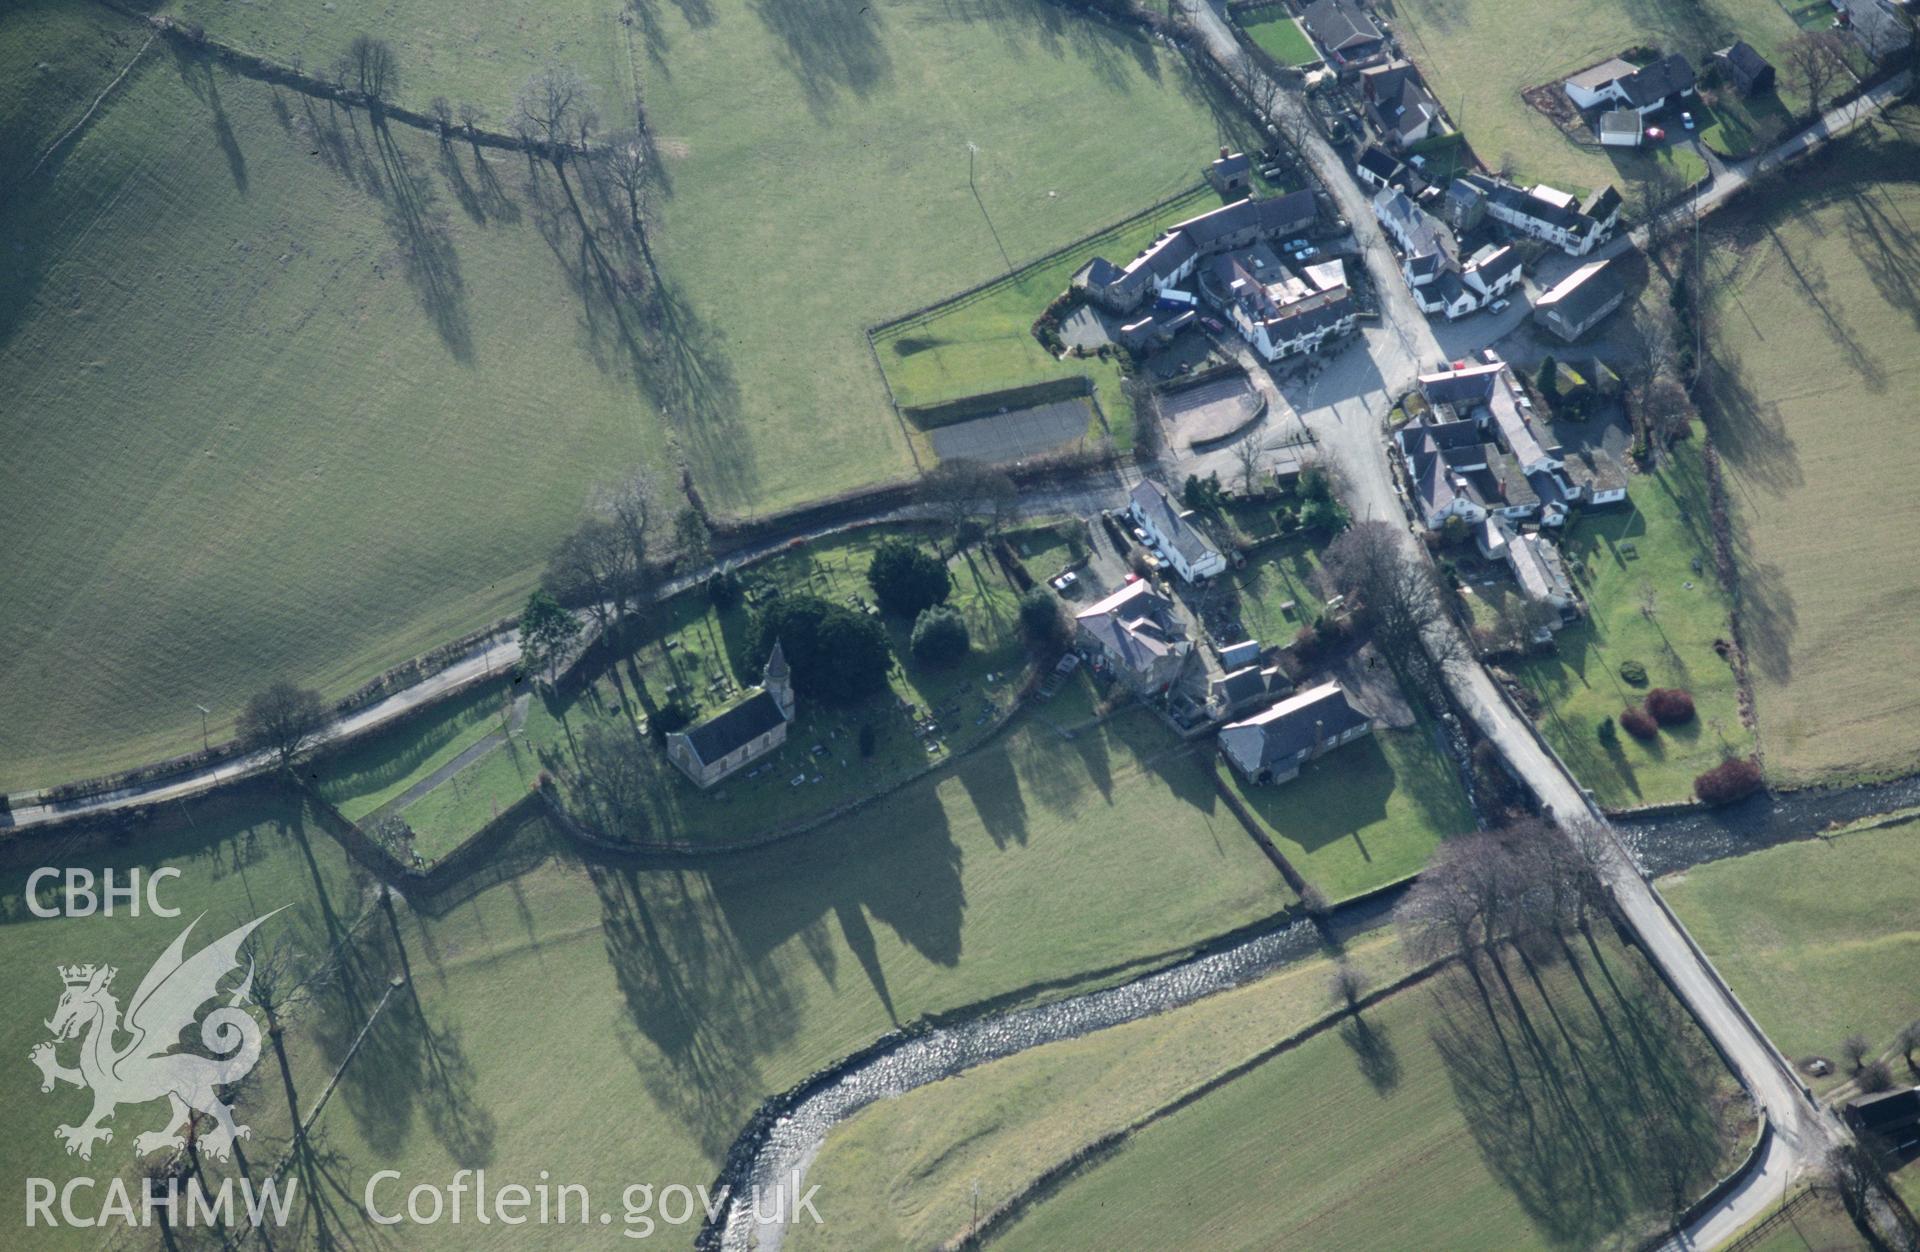 Slide of RCAHMW colour oblique aerial photograph of Llanarmon Dyffryn Ceiriog, taken by C.R. Musson, 14/2/1997.